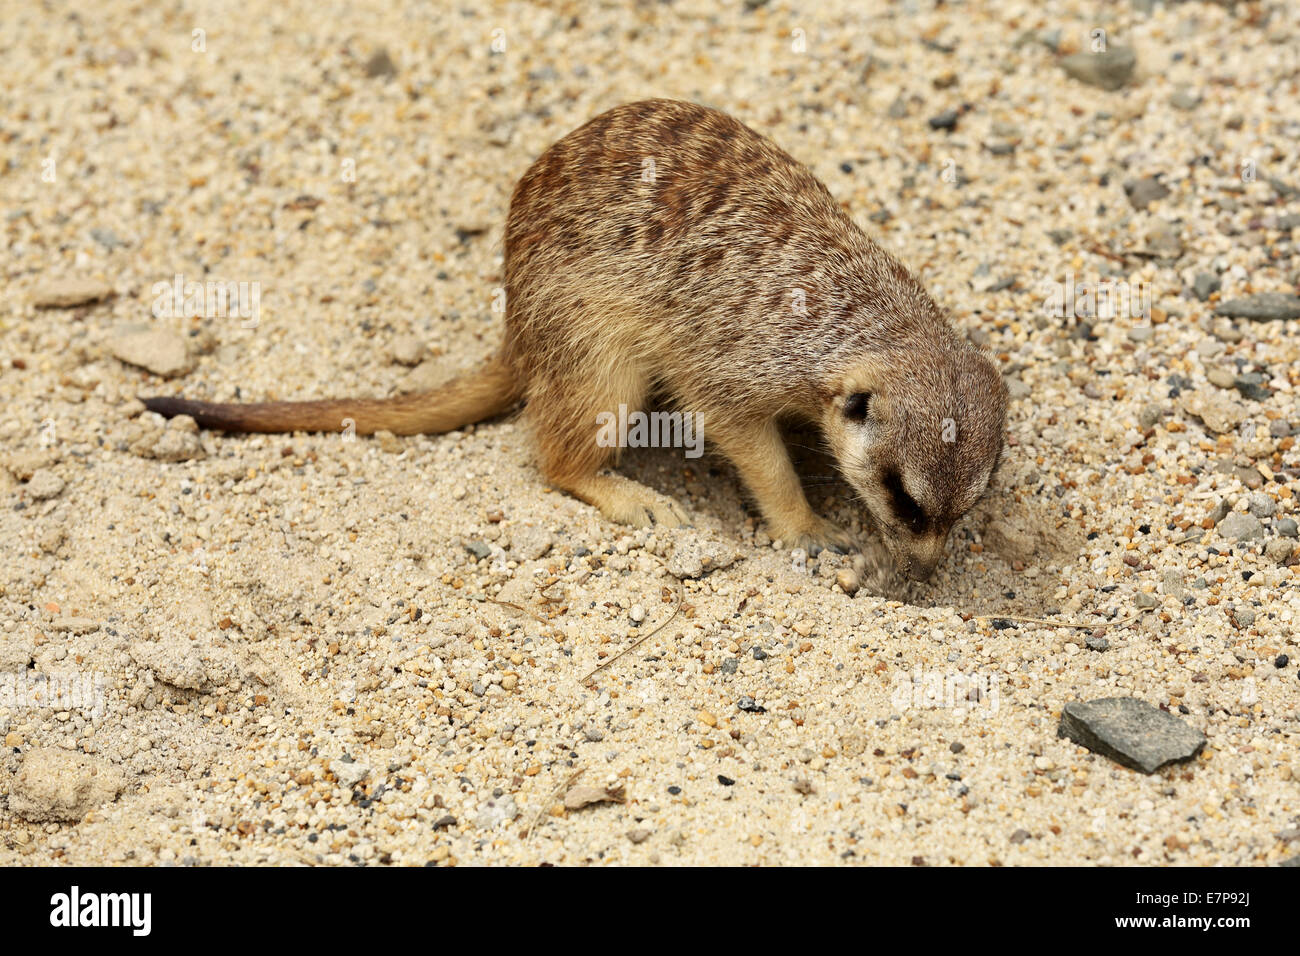 Un Meerkat (Suricata suricatta) scavando nel terreno sabbioso. Meerkats provenienti dal Sud Africa. Foto Stock